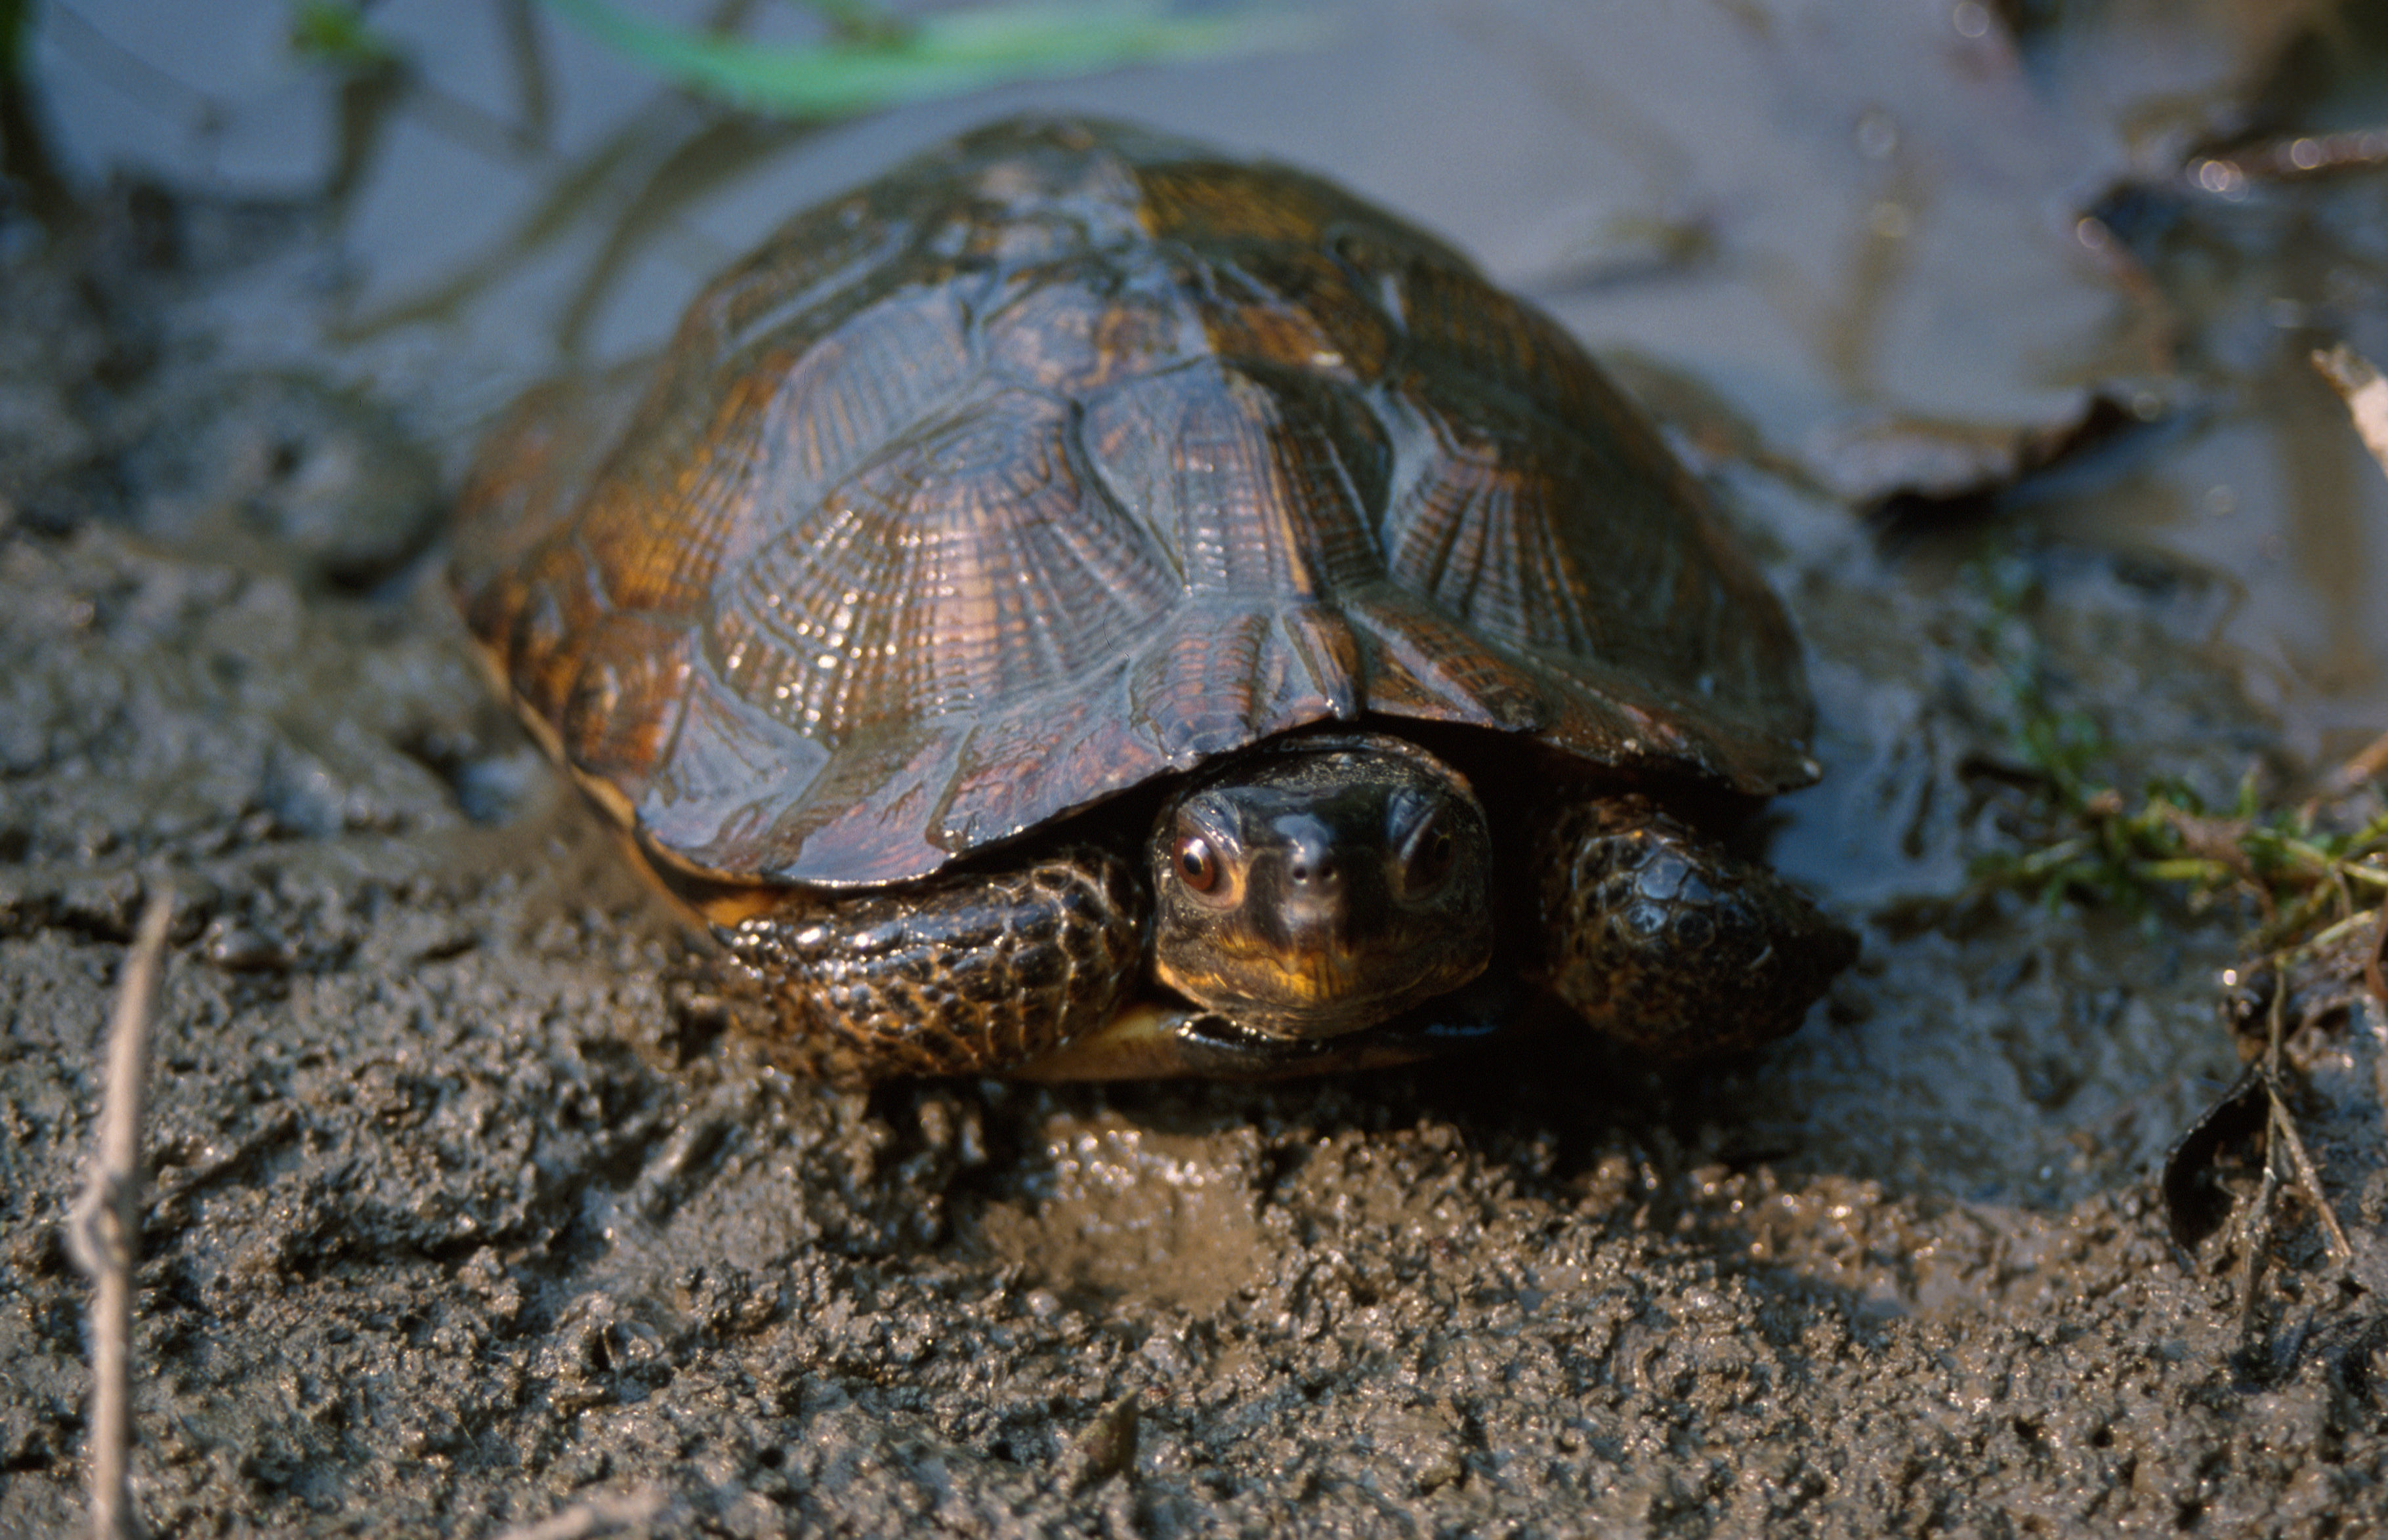 Image of Wood Turtle